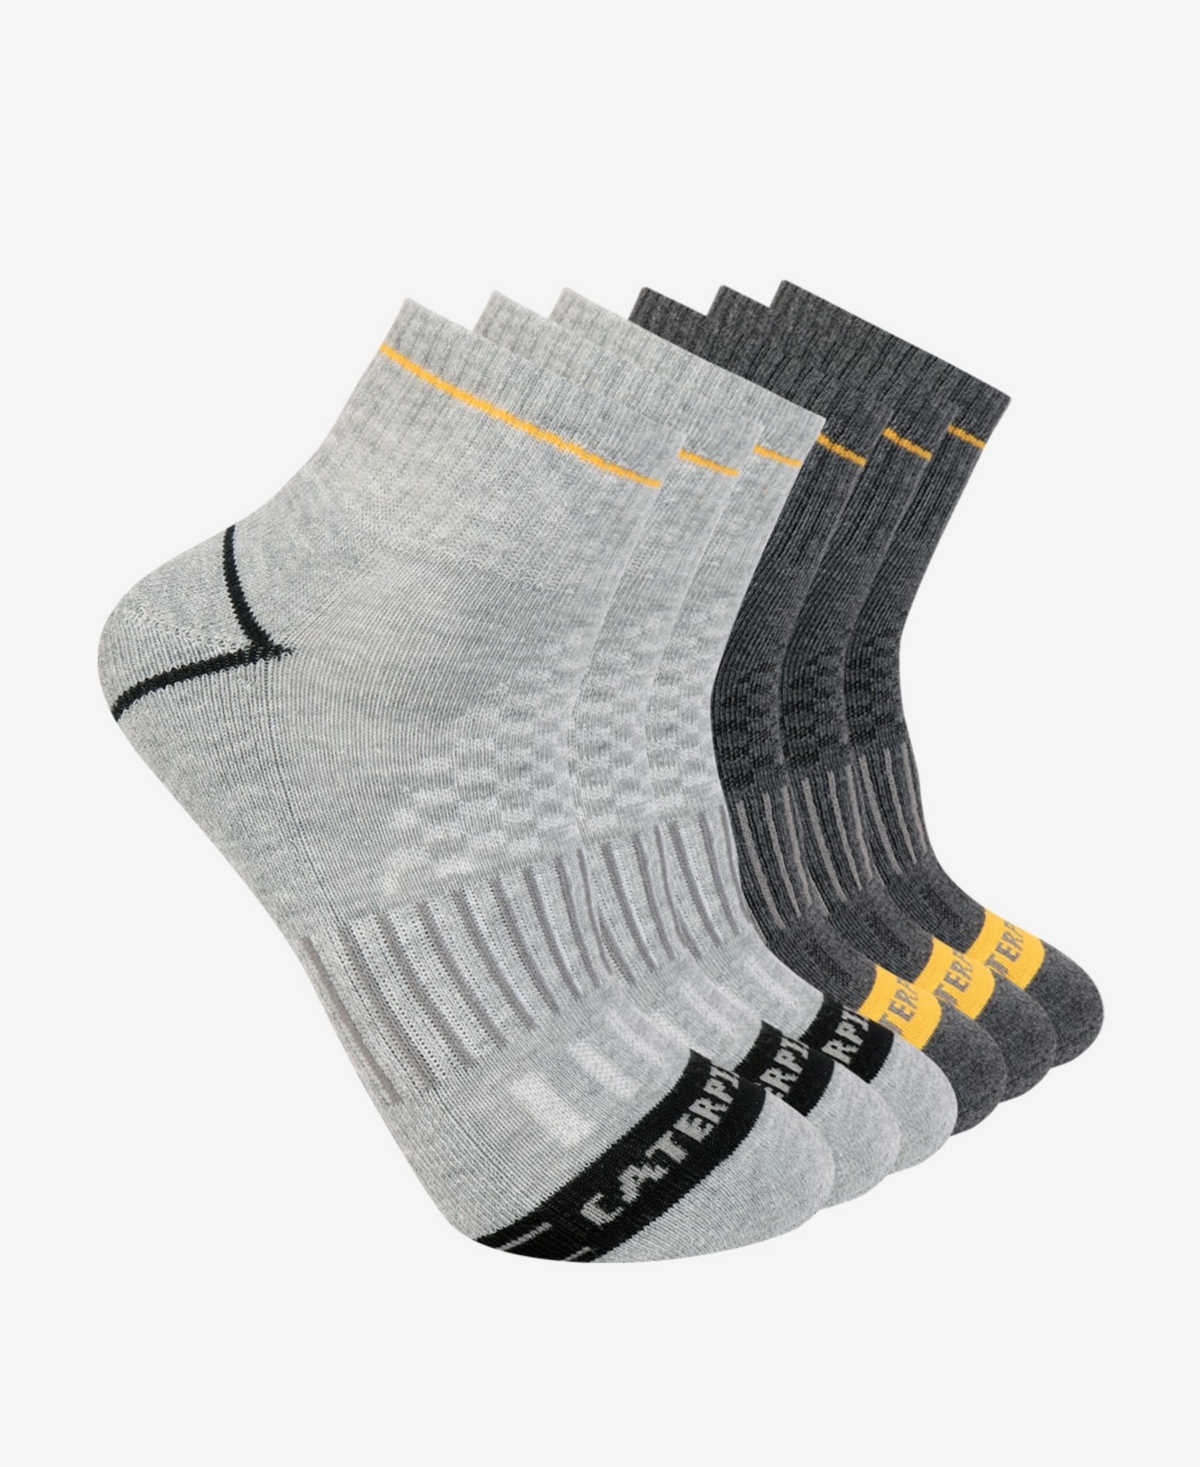 Men's Half Cushion Quarter Socks, Pack of 6 - Black, Gray with Yellow